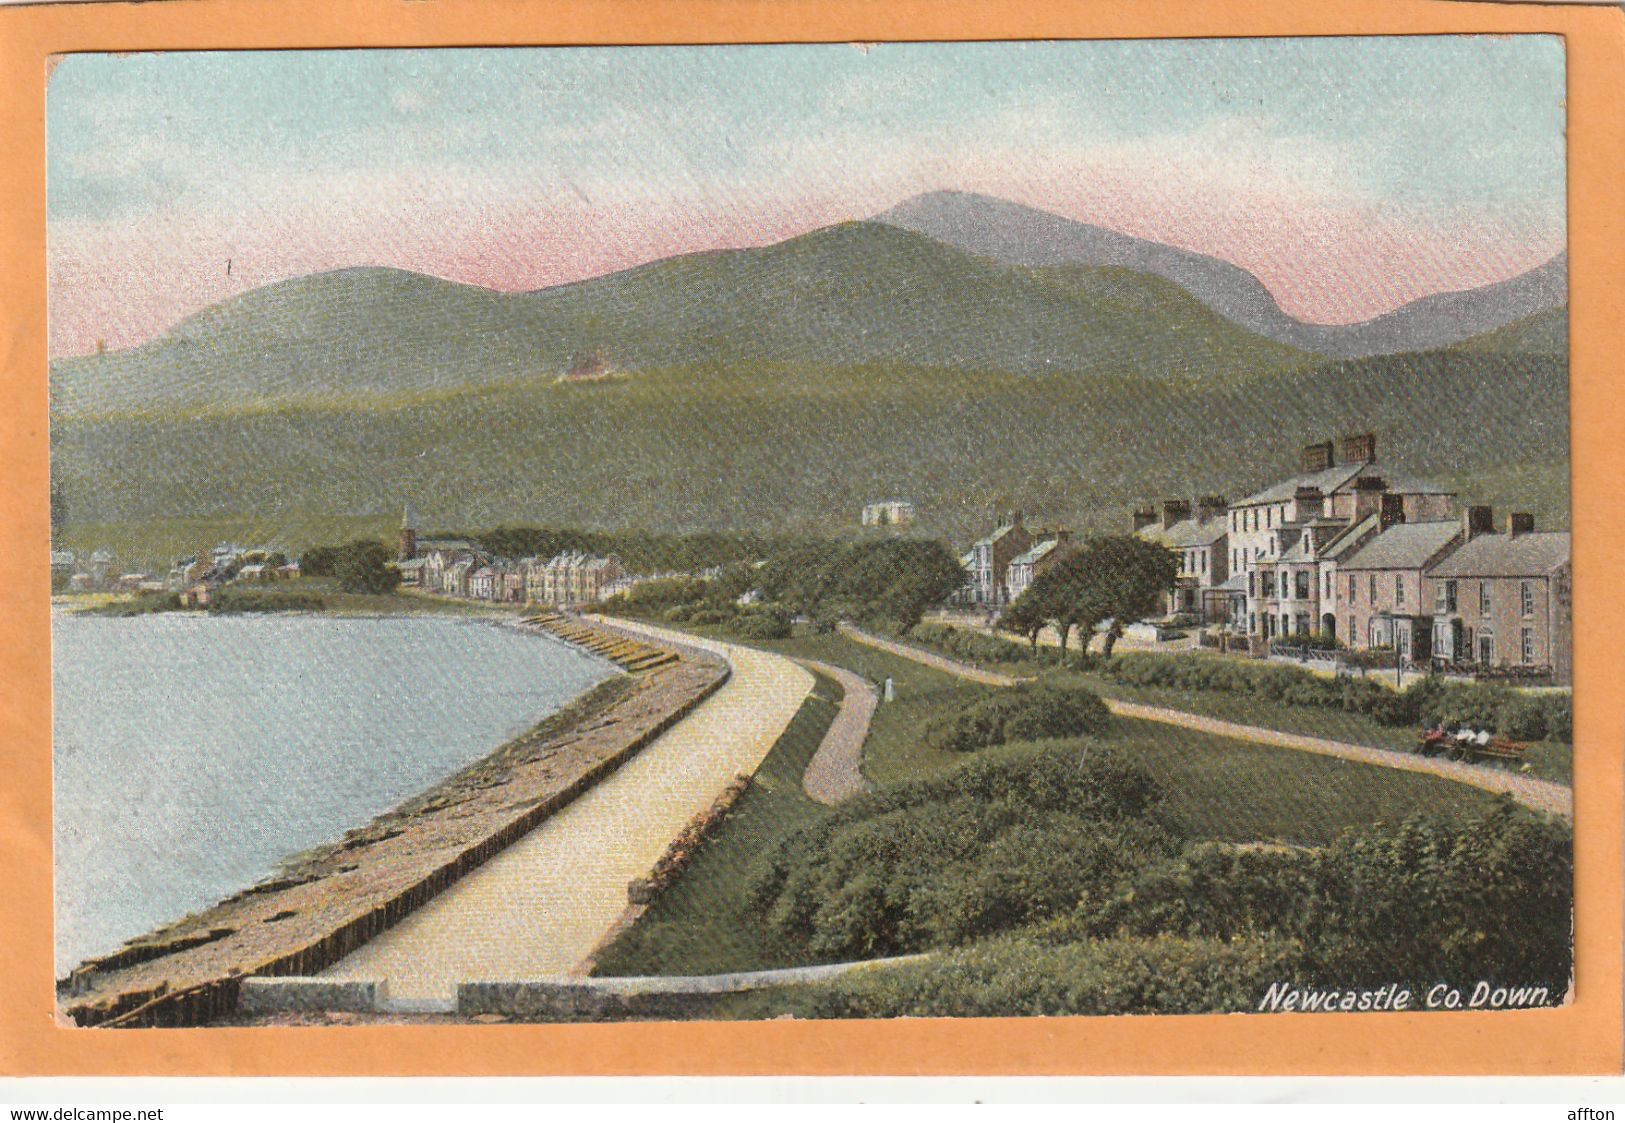 Newcastle Co Down N Ireland 1906 Postcard - Down